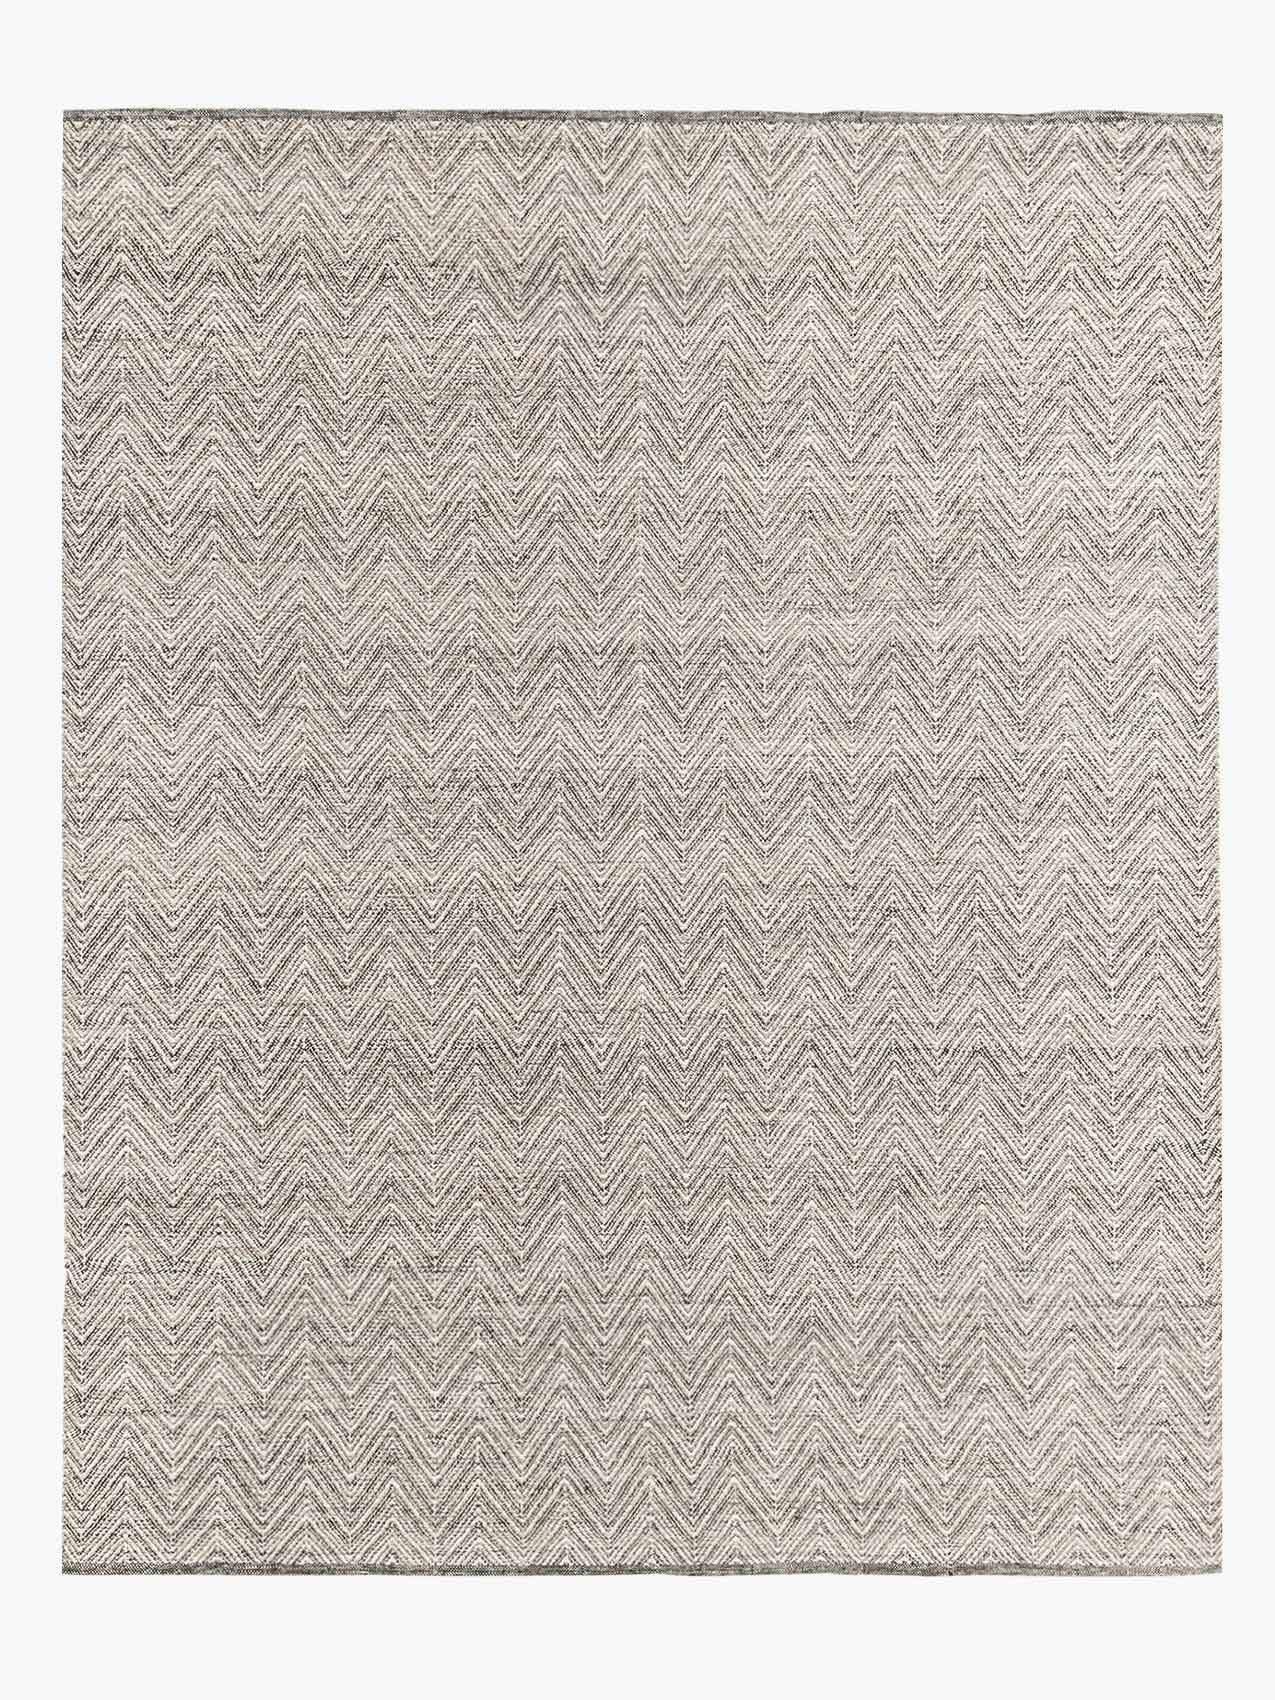 For Sale: Beige (Sand) Ben Soleimani Ceyah Rug– Hand-woven Plush Textured Wool + Linen Charcoal 6'x9'